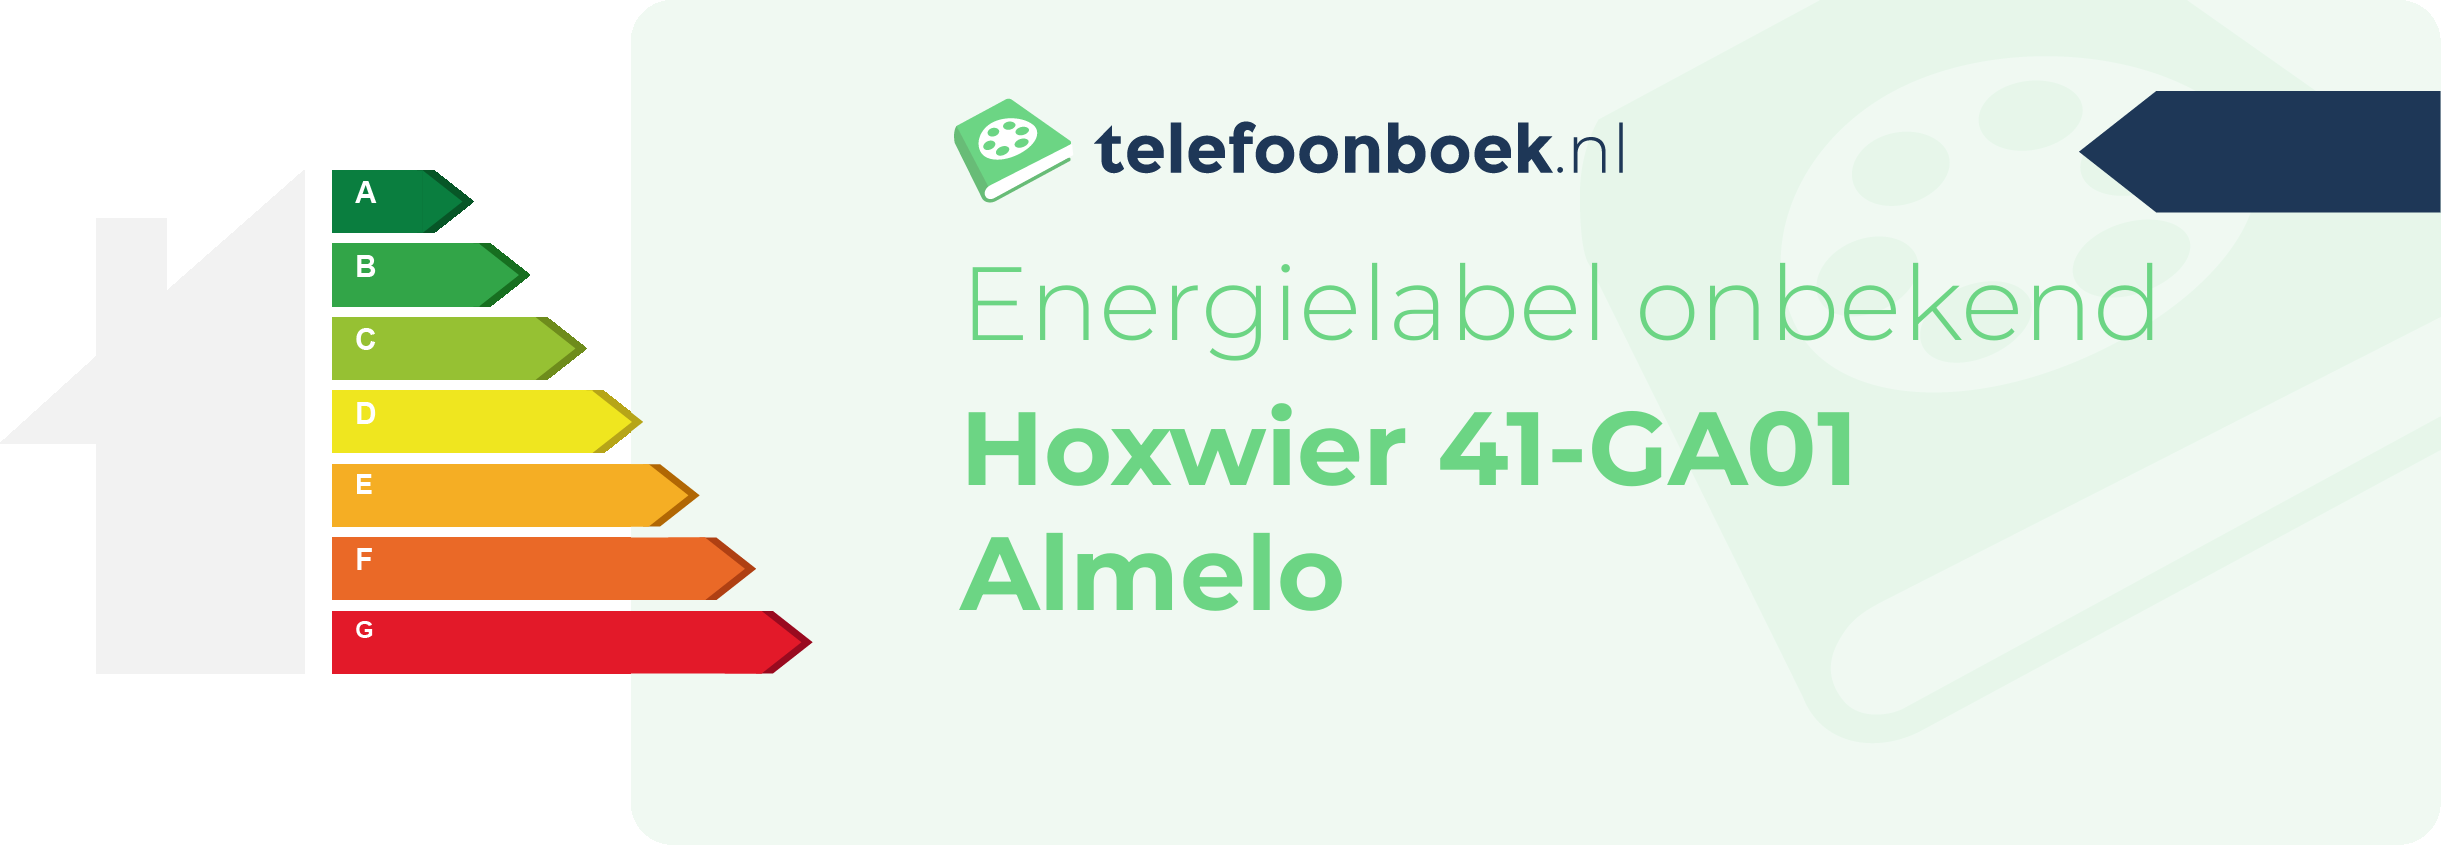 Energielabel Hoxwier 41-GA01 Almelo